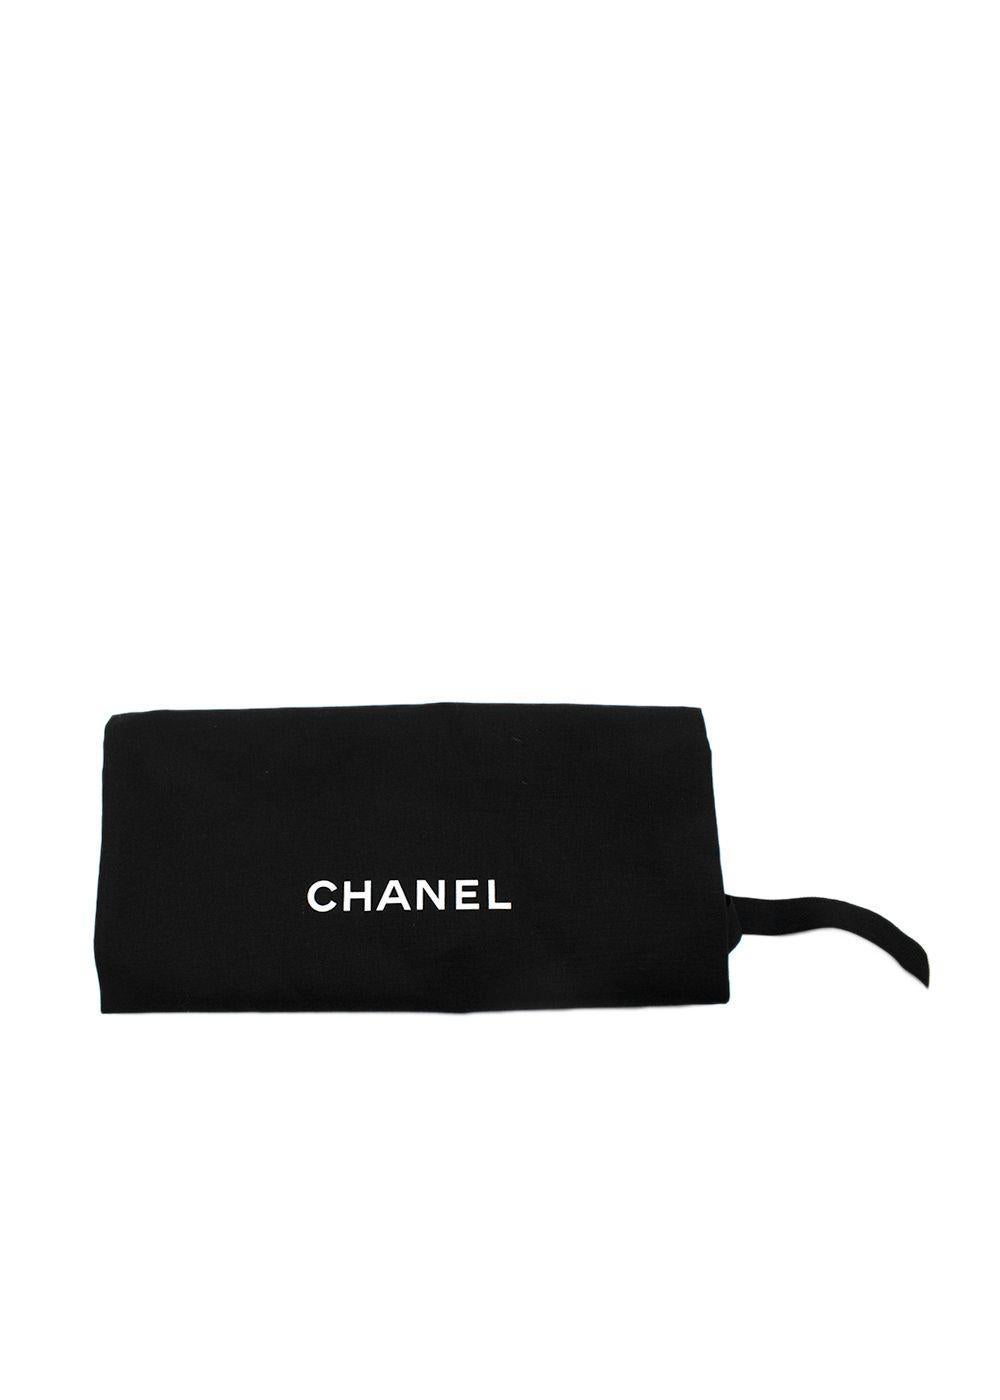 Chanel Printed Canvas Block Heeled Slingback Pumps 2